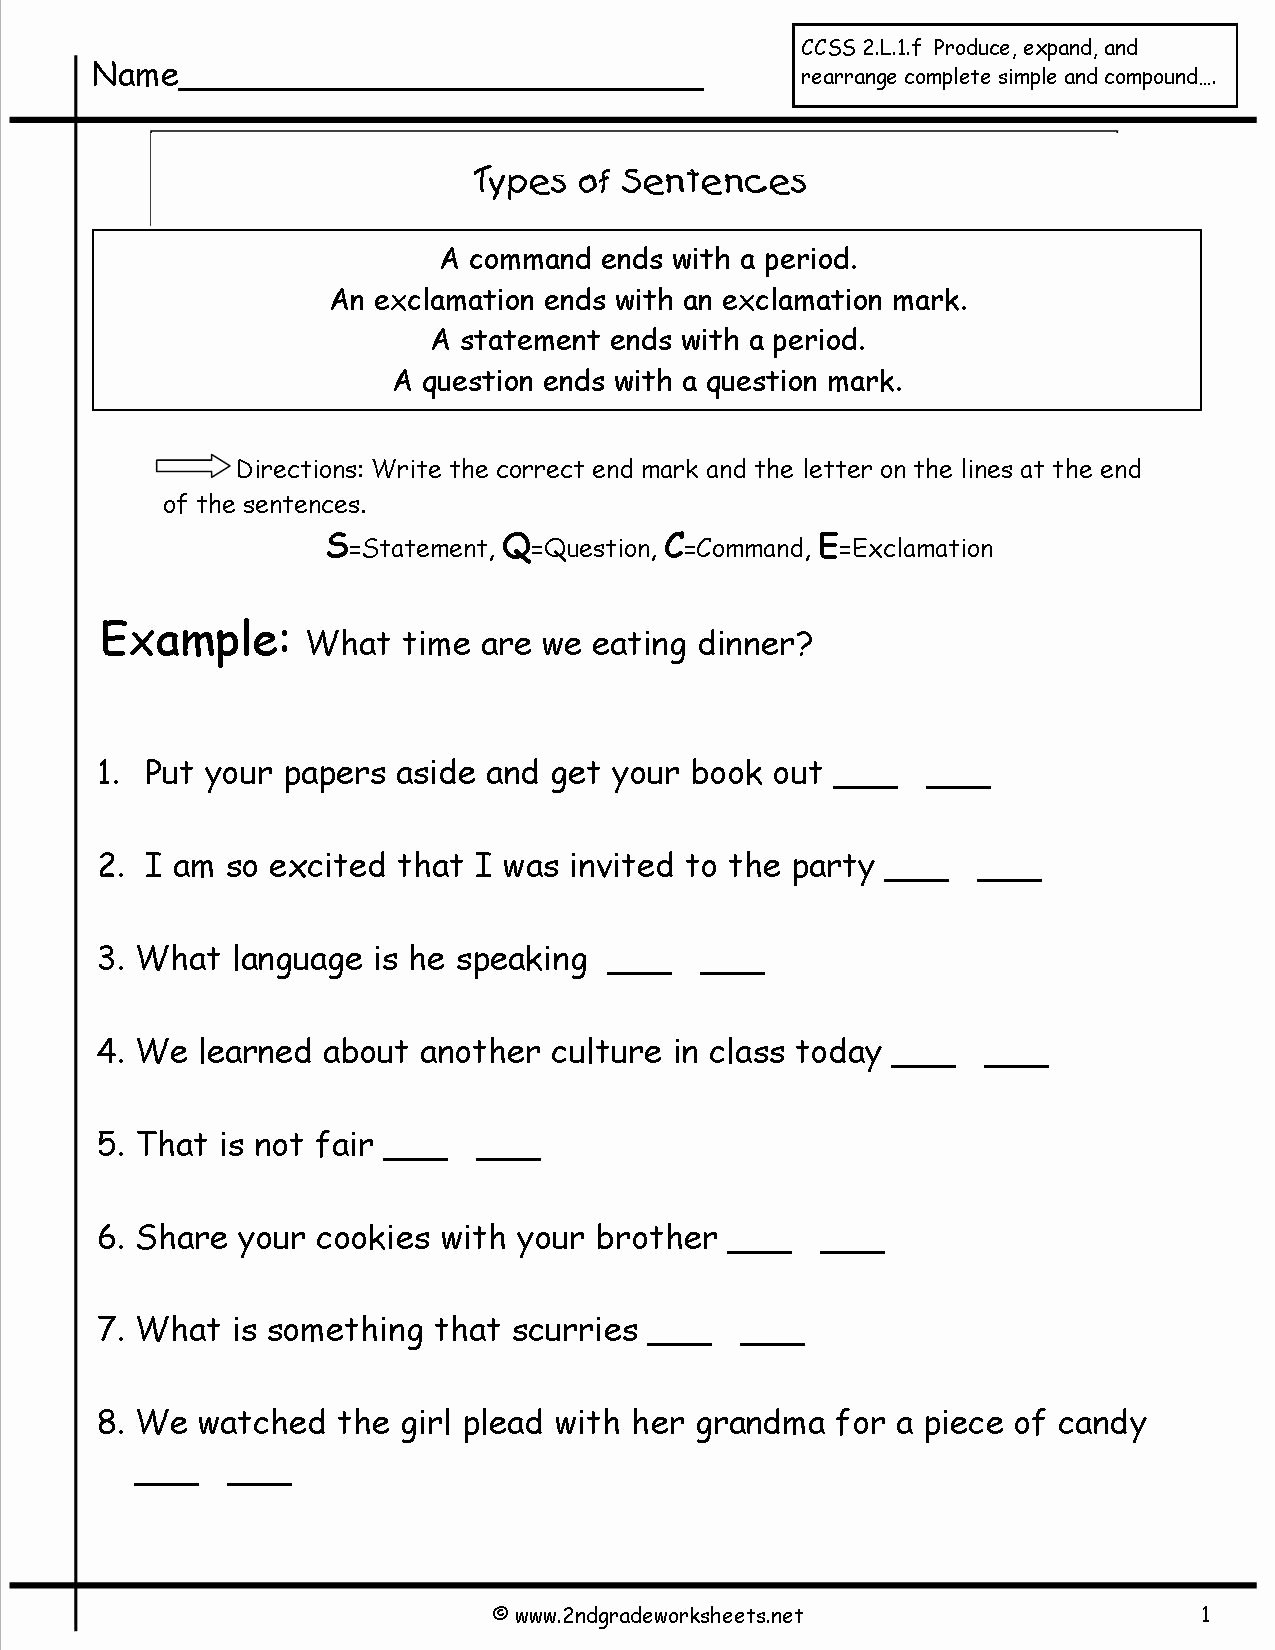 4 Types Of Sentences Worksheet Luxury Second Grade Sentences Worksheets Ccss 2 L 1 F Worksheets